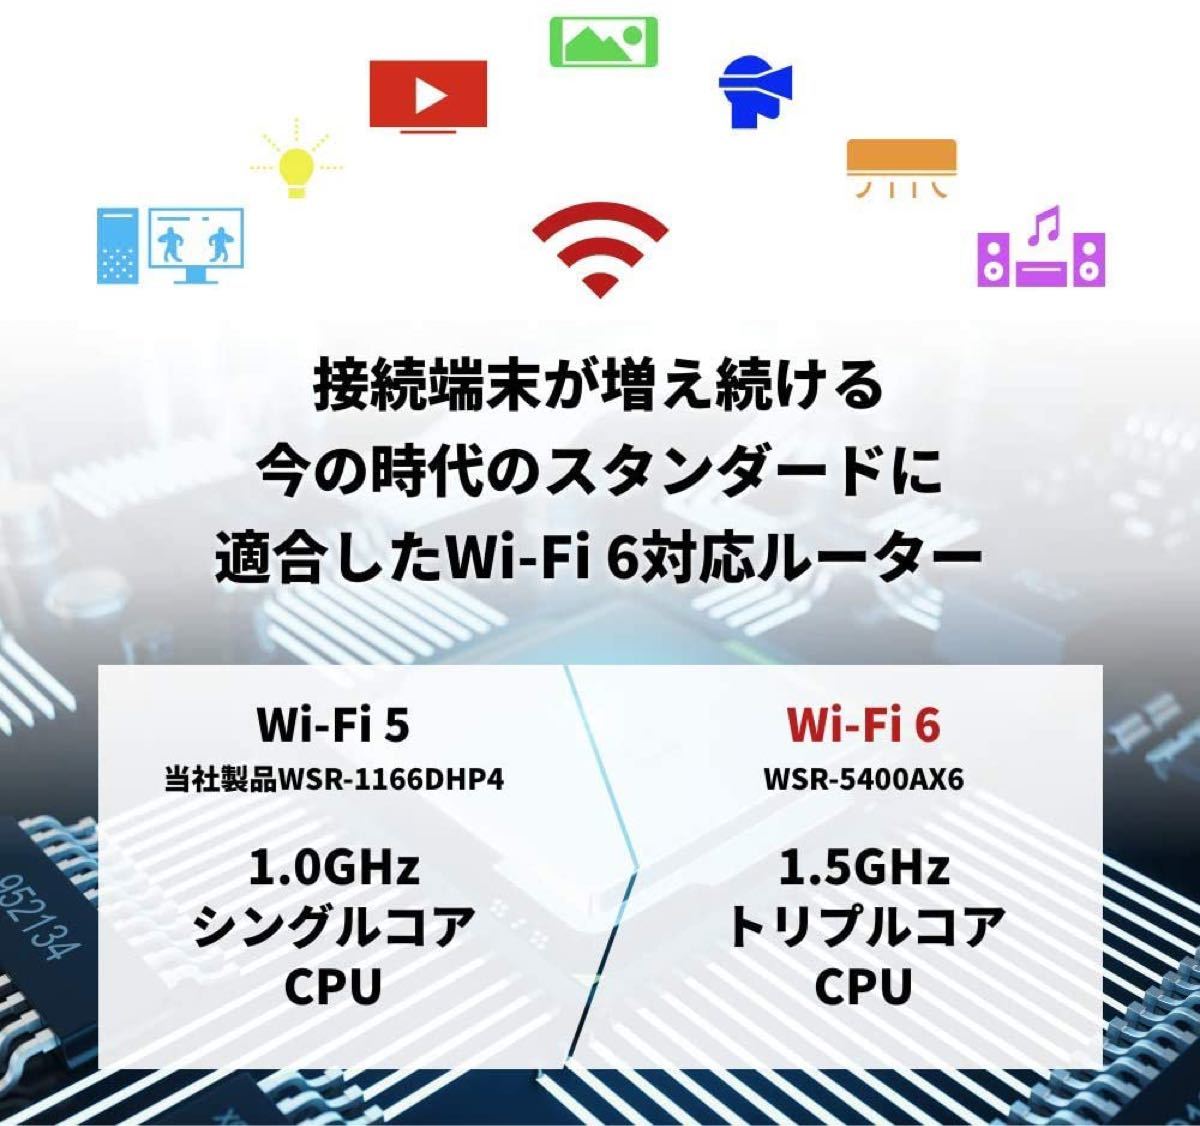 BUFFALO　Wi-Fi6(11ax)対応ルーター　無線LAN親機　WSR-5400AX6-CG[WiFi6 プレミアムモデル]